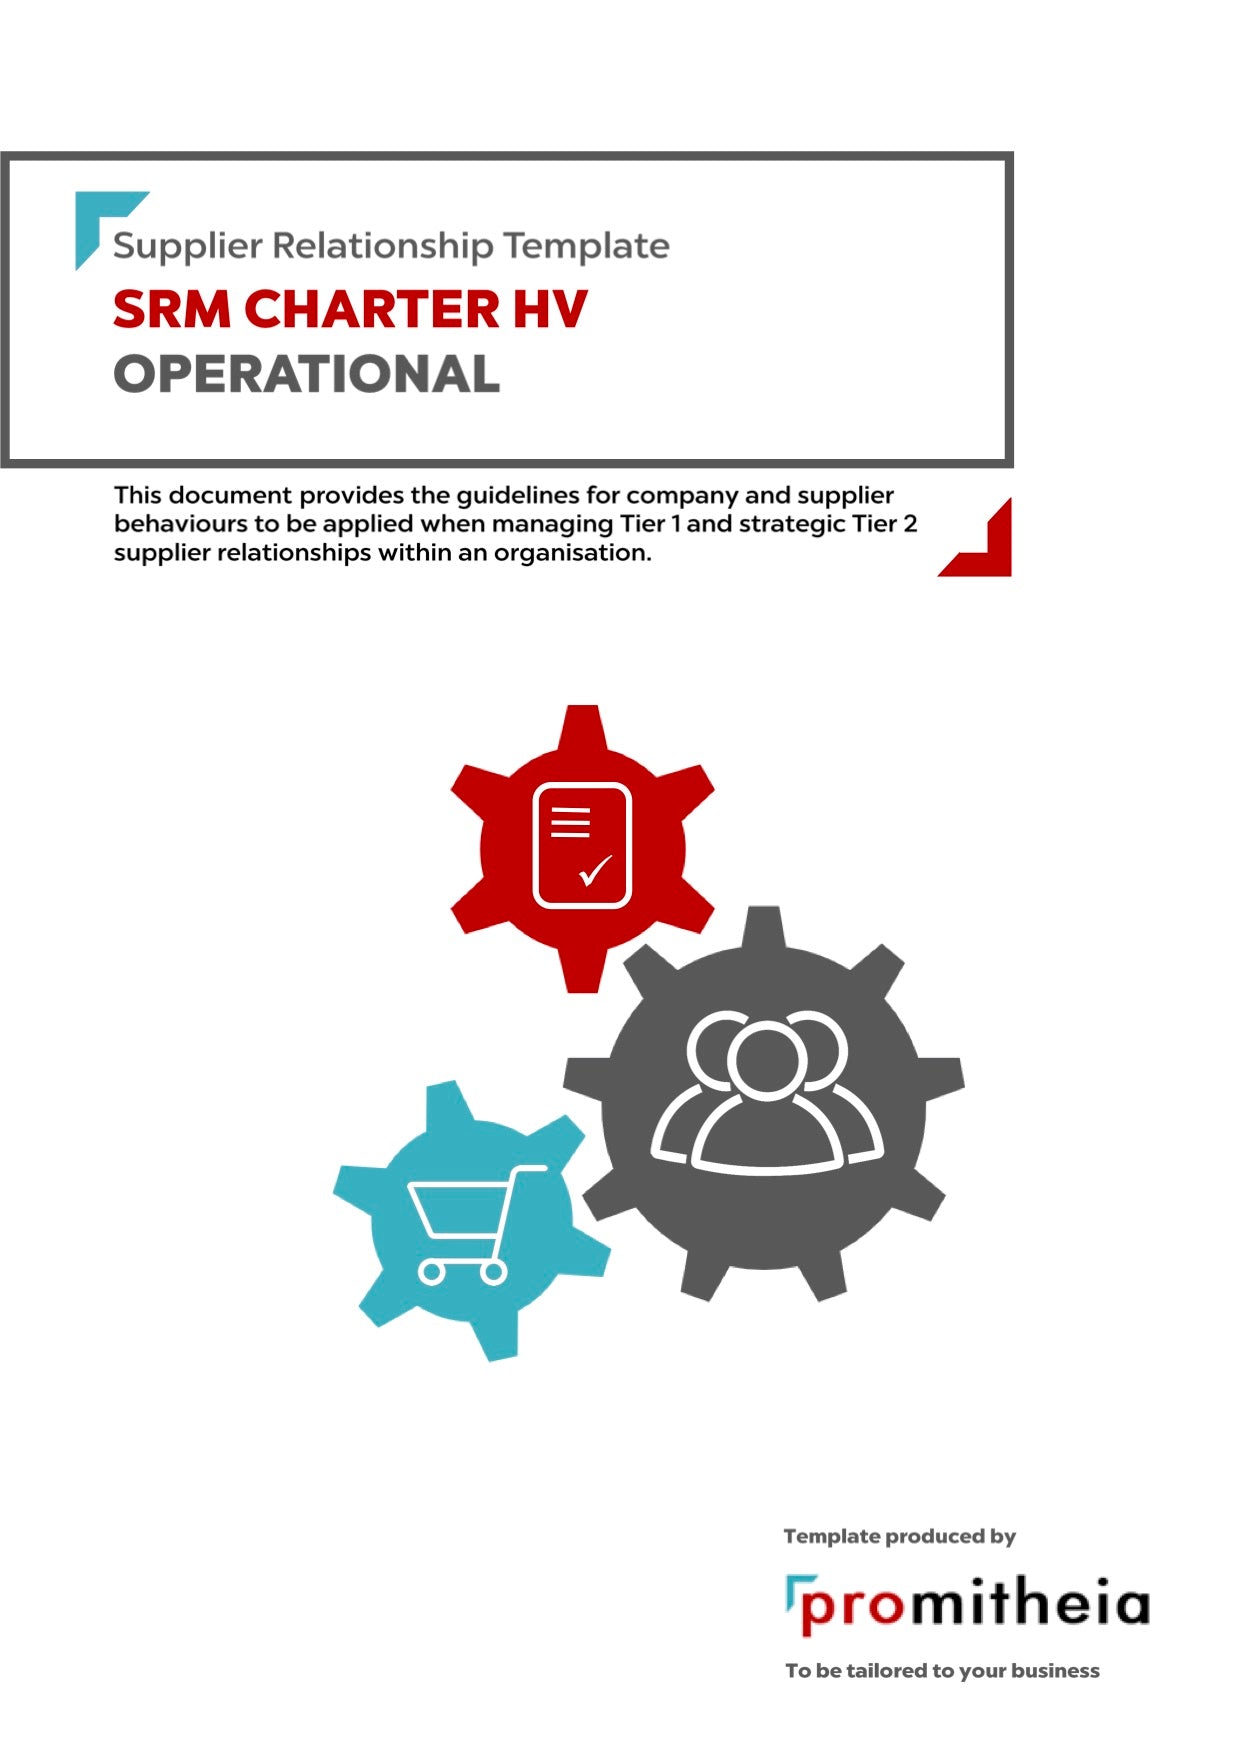 Supplier Relationship Management Charter